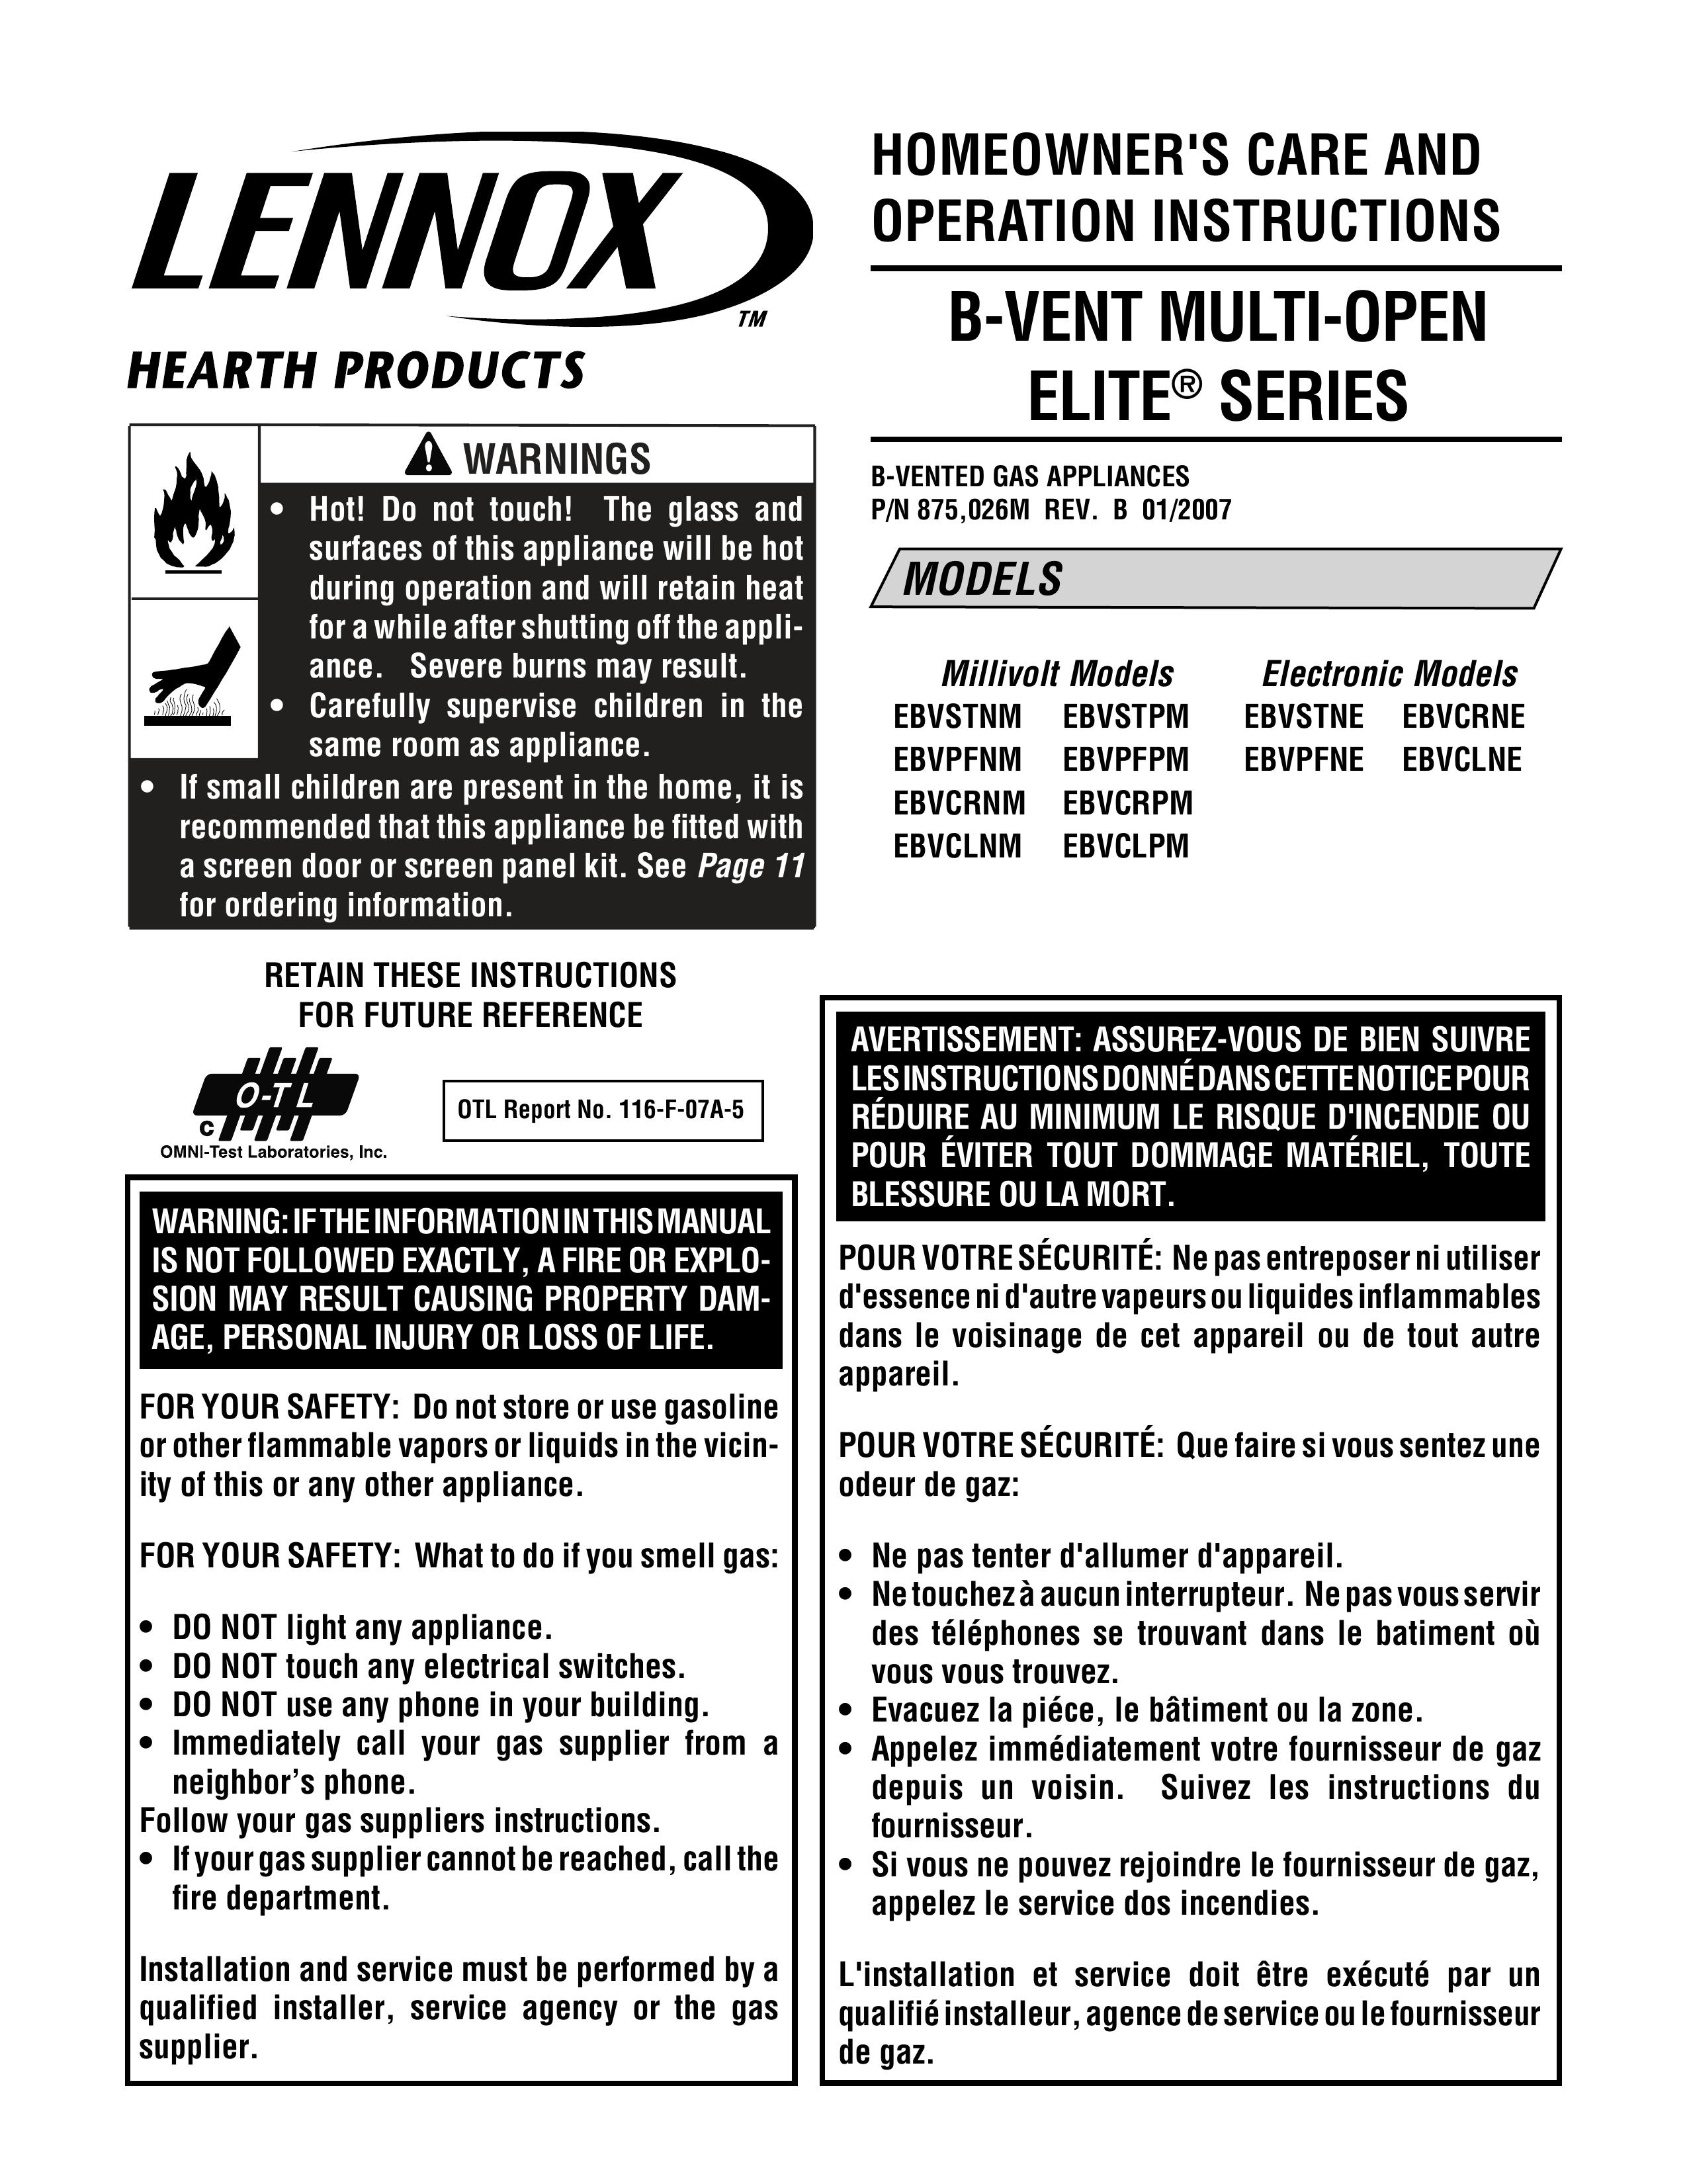 Lennox Hearth EBVCLPM Outdoor Fireplace User Manual